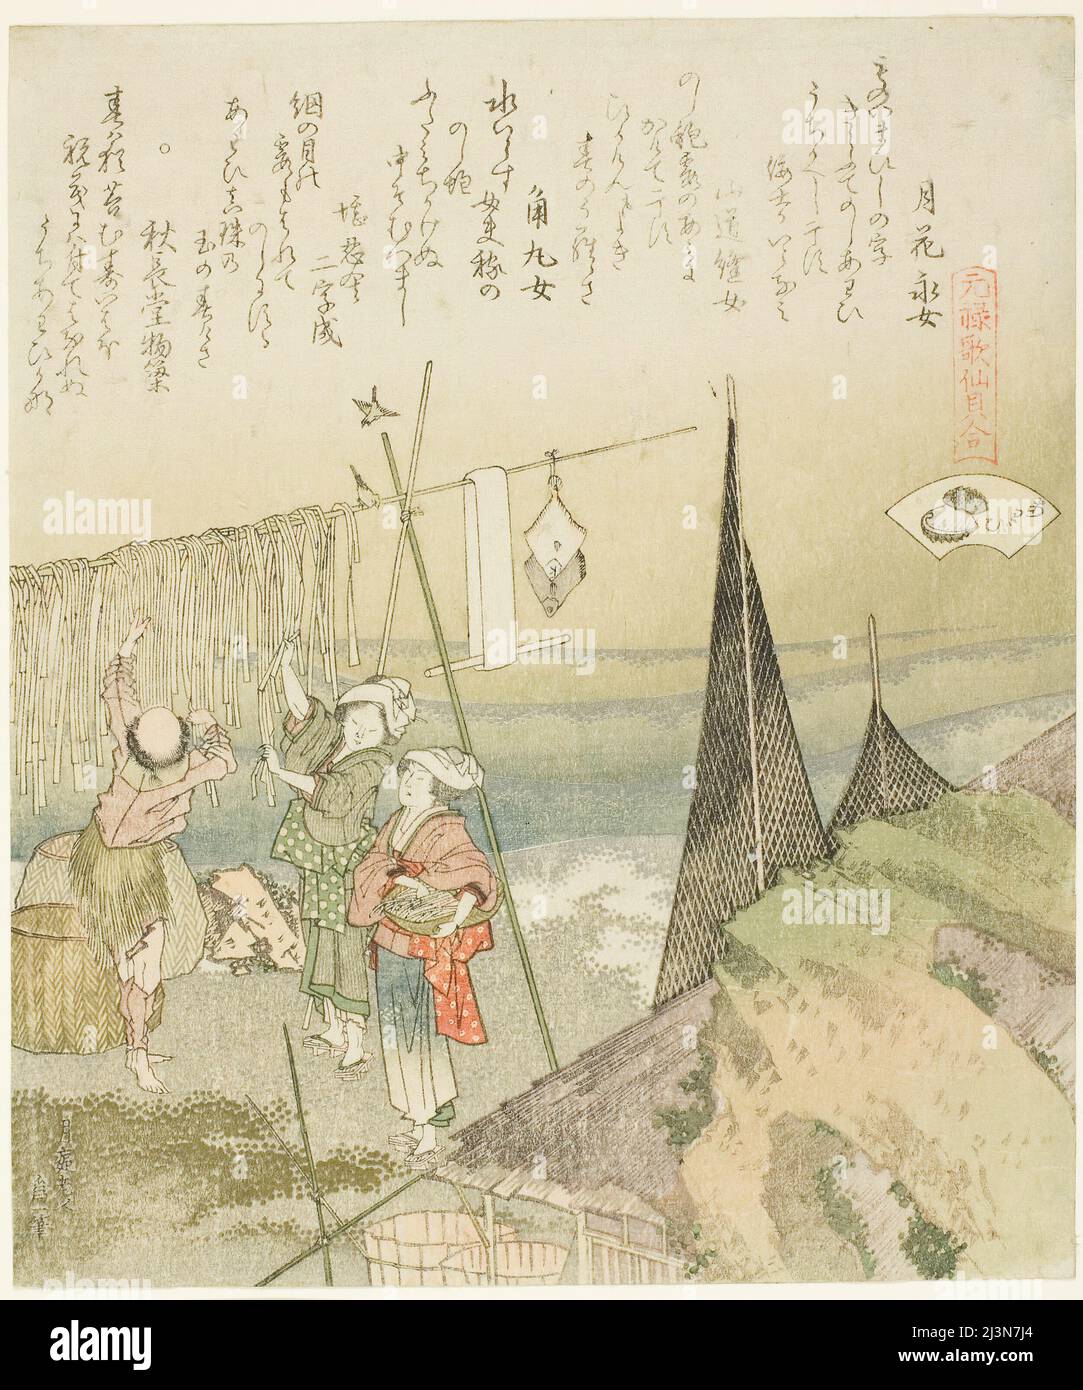 Hängender Abalone Out to Dry, Illustration für Abalone (Awabi), aus der Serie "A Matching Game with Genroku-Period Poem Shells (Genroku kasen kai awase)", Japan, 1821. Stockfoto